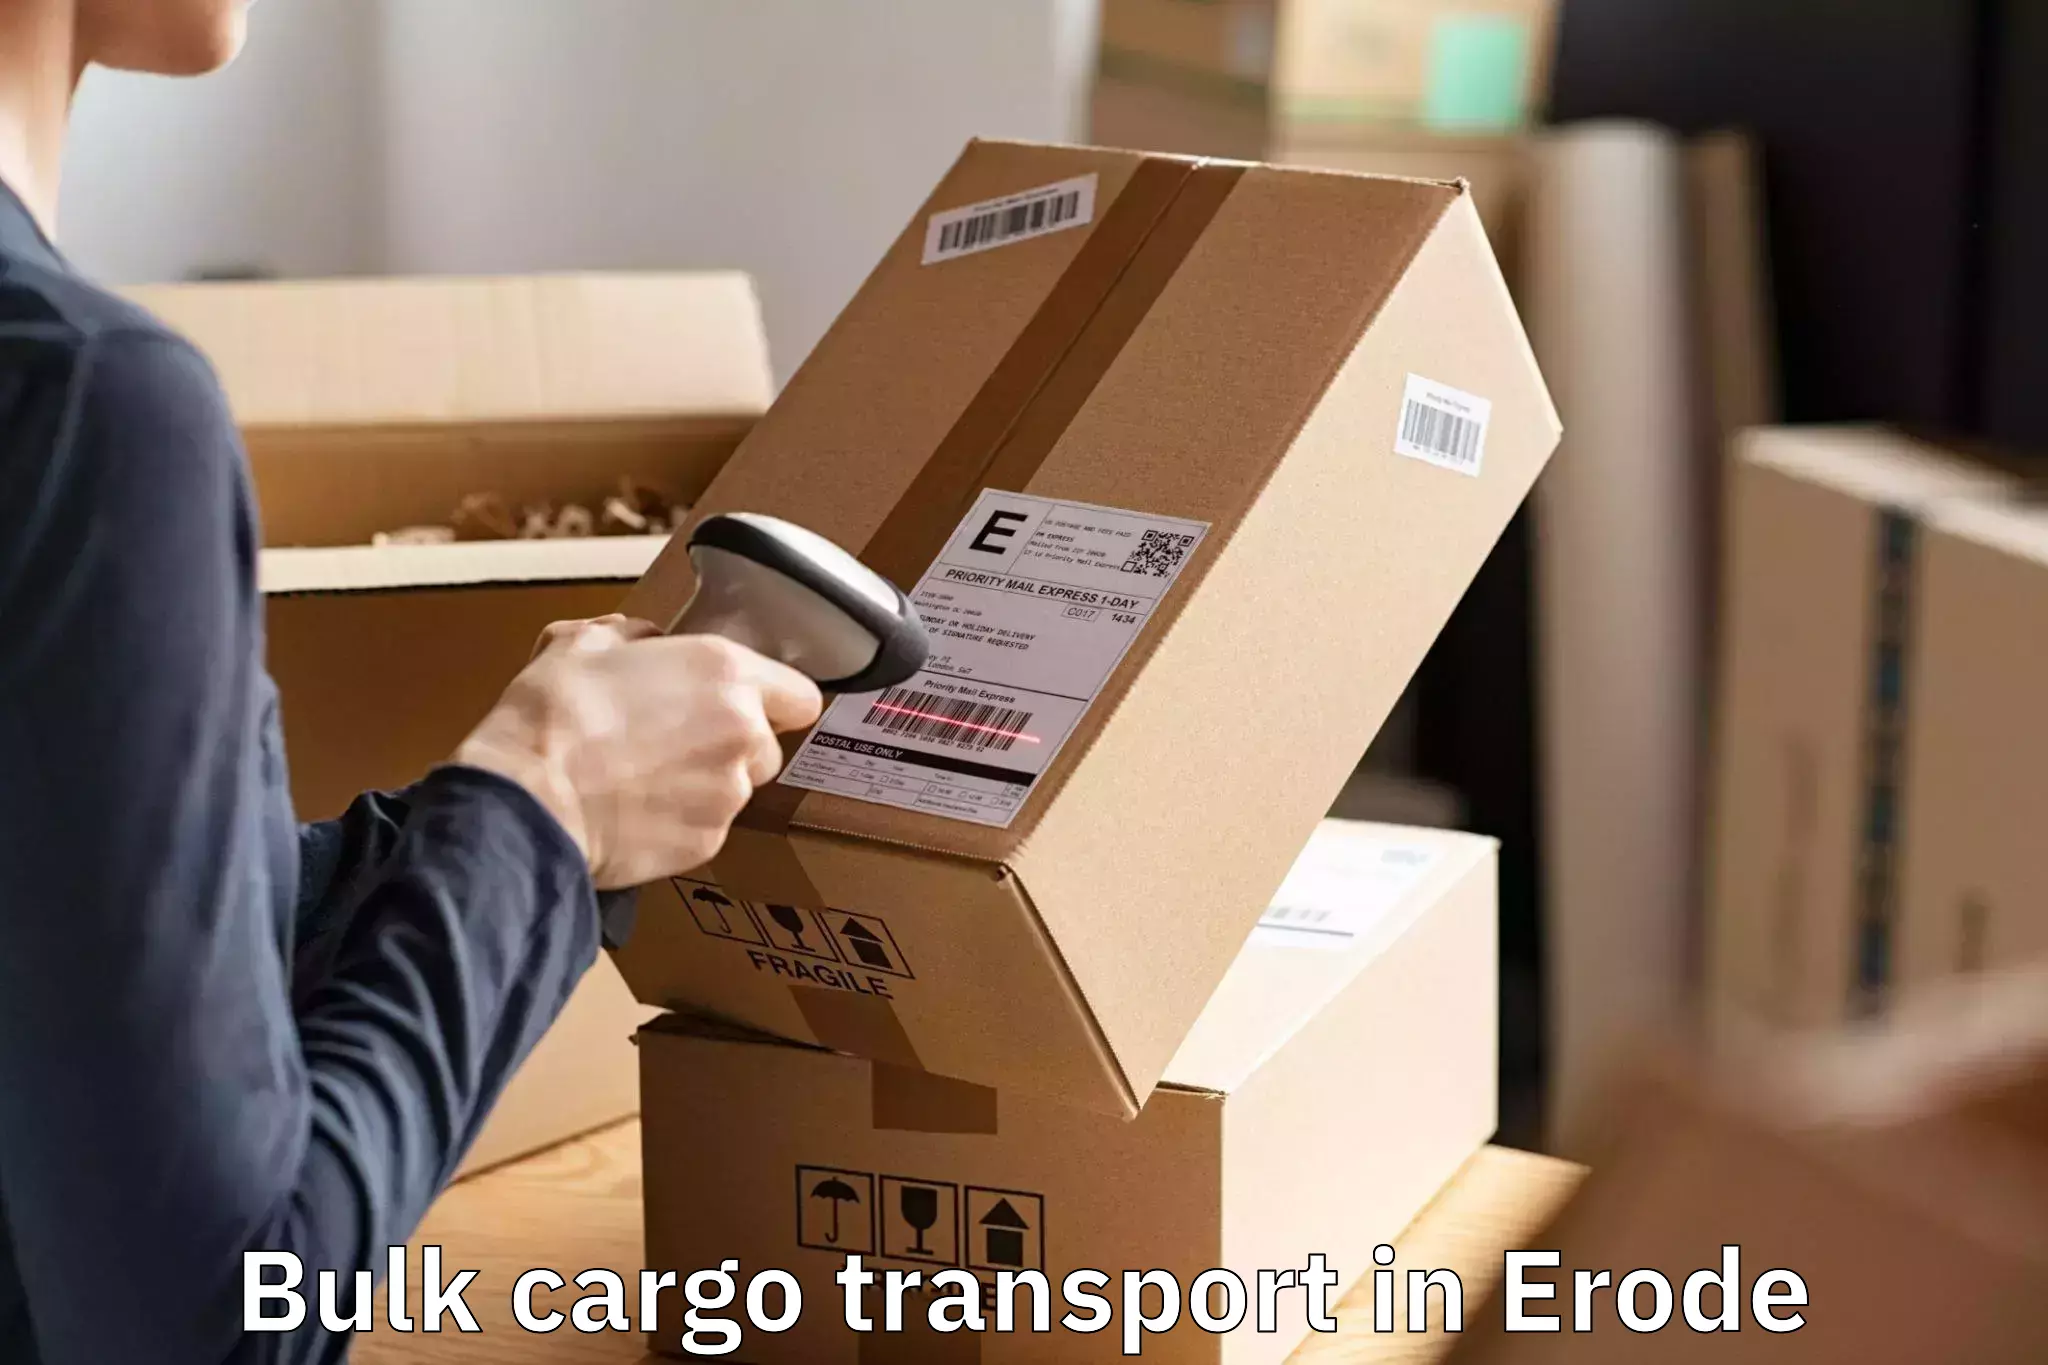 Efficient Bulk Cargo Transport in Erode, Tamil Nadu (TN)